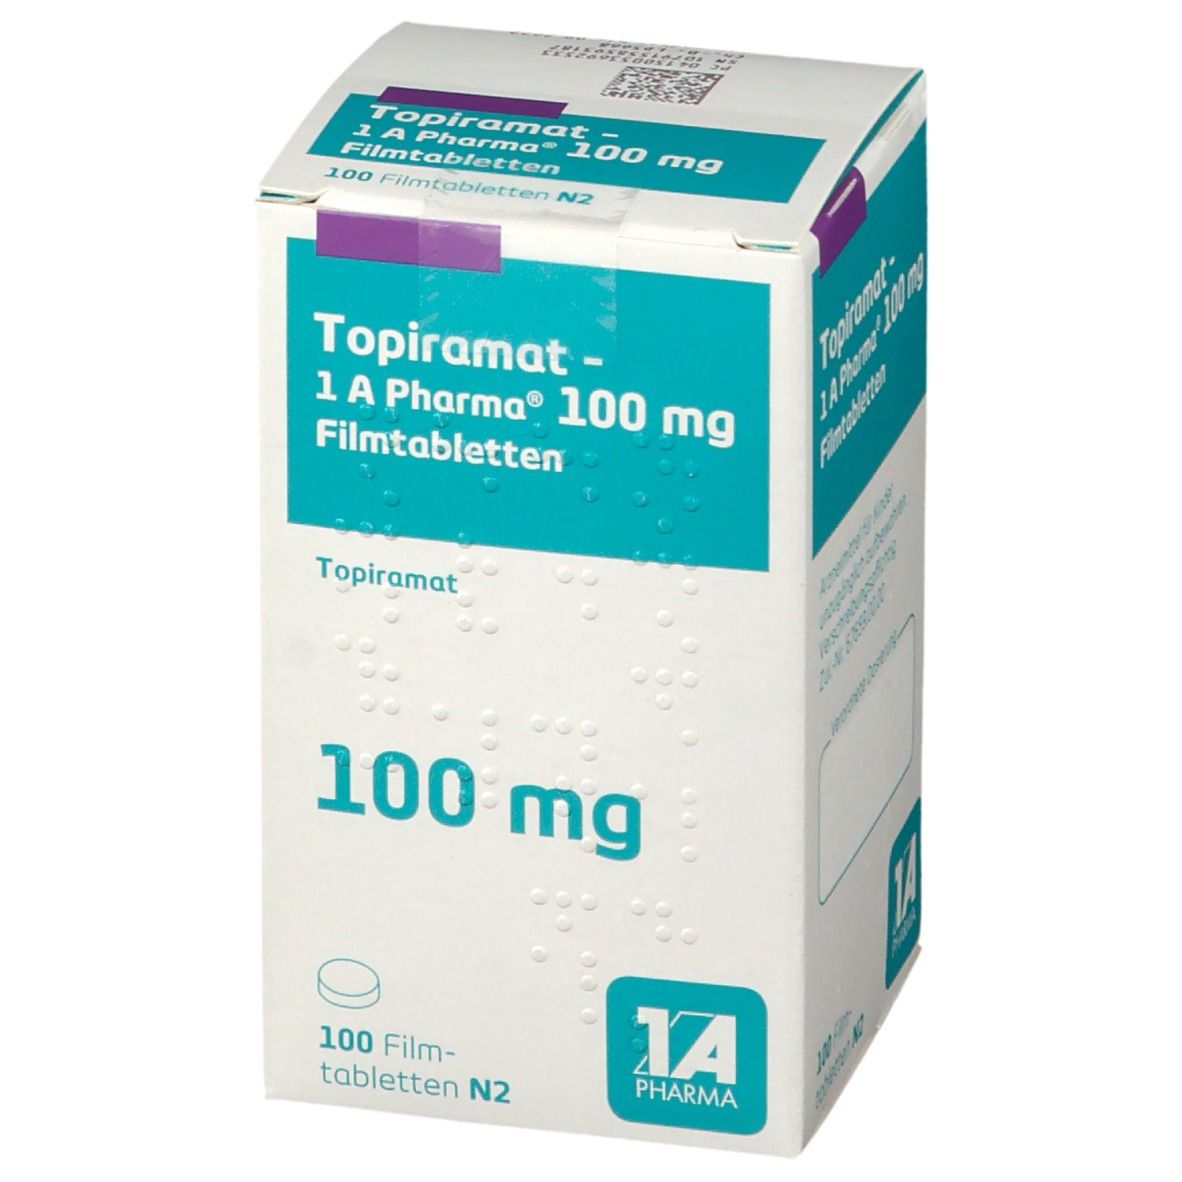 Topiramat - 1 A Pharma® 100 mg